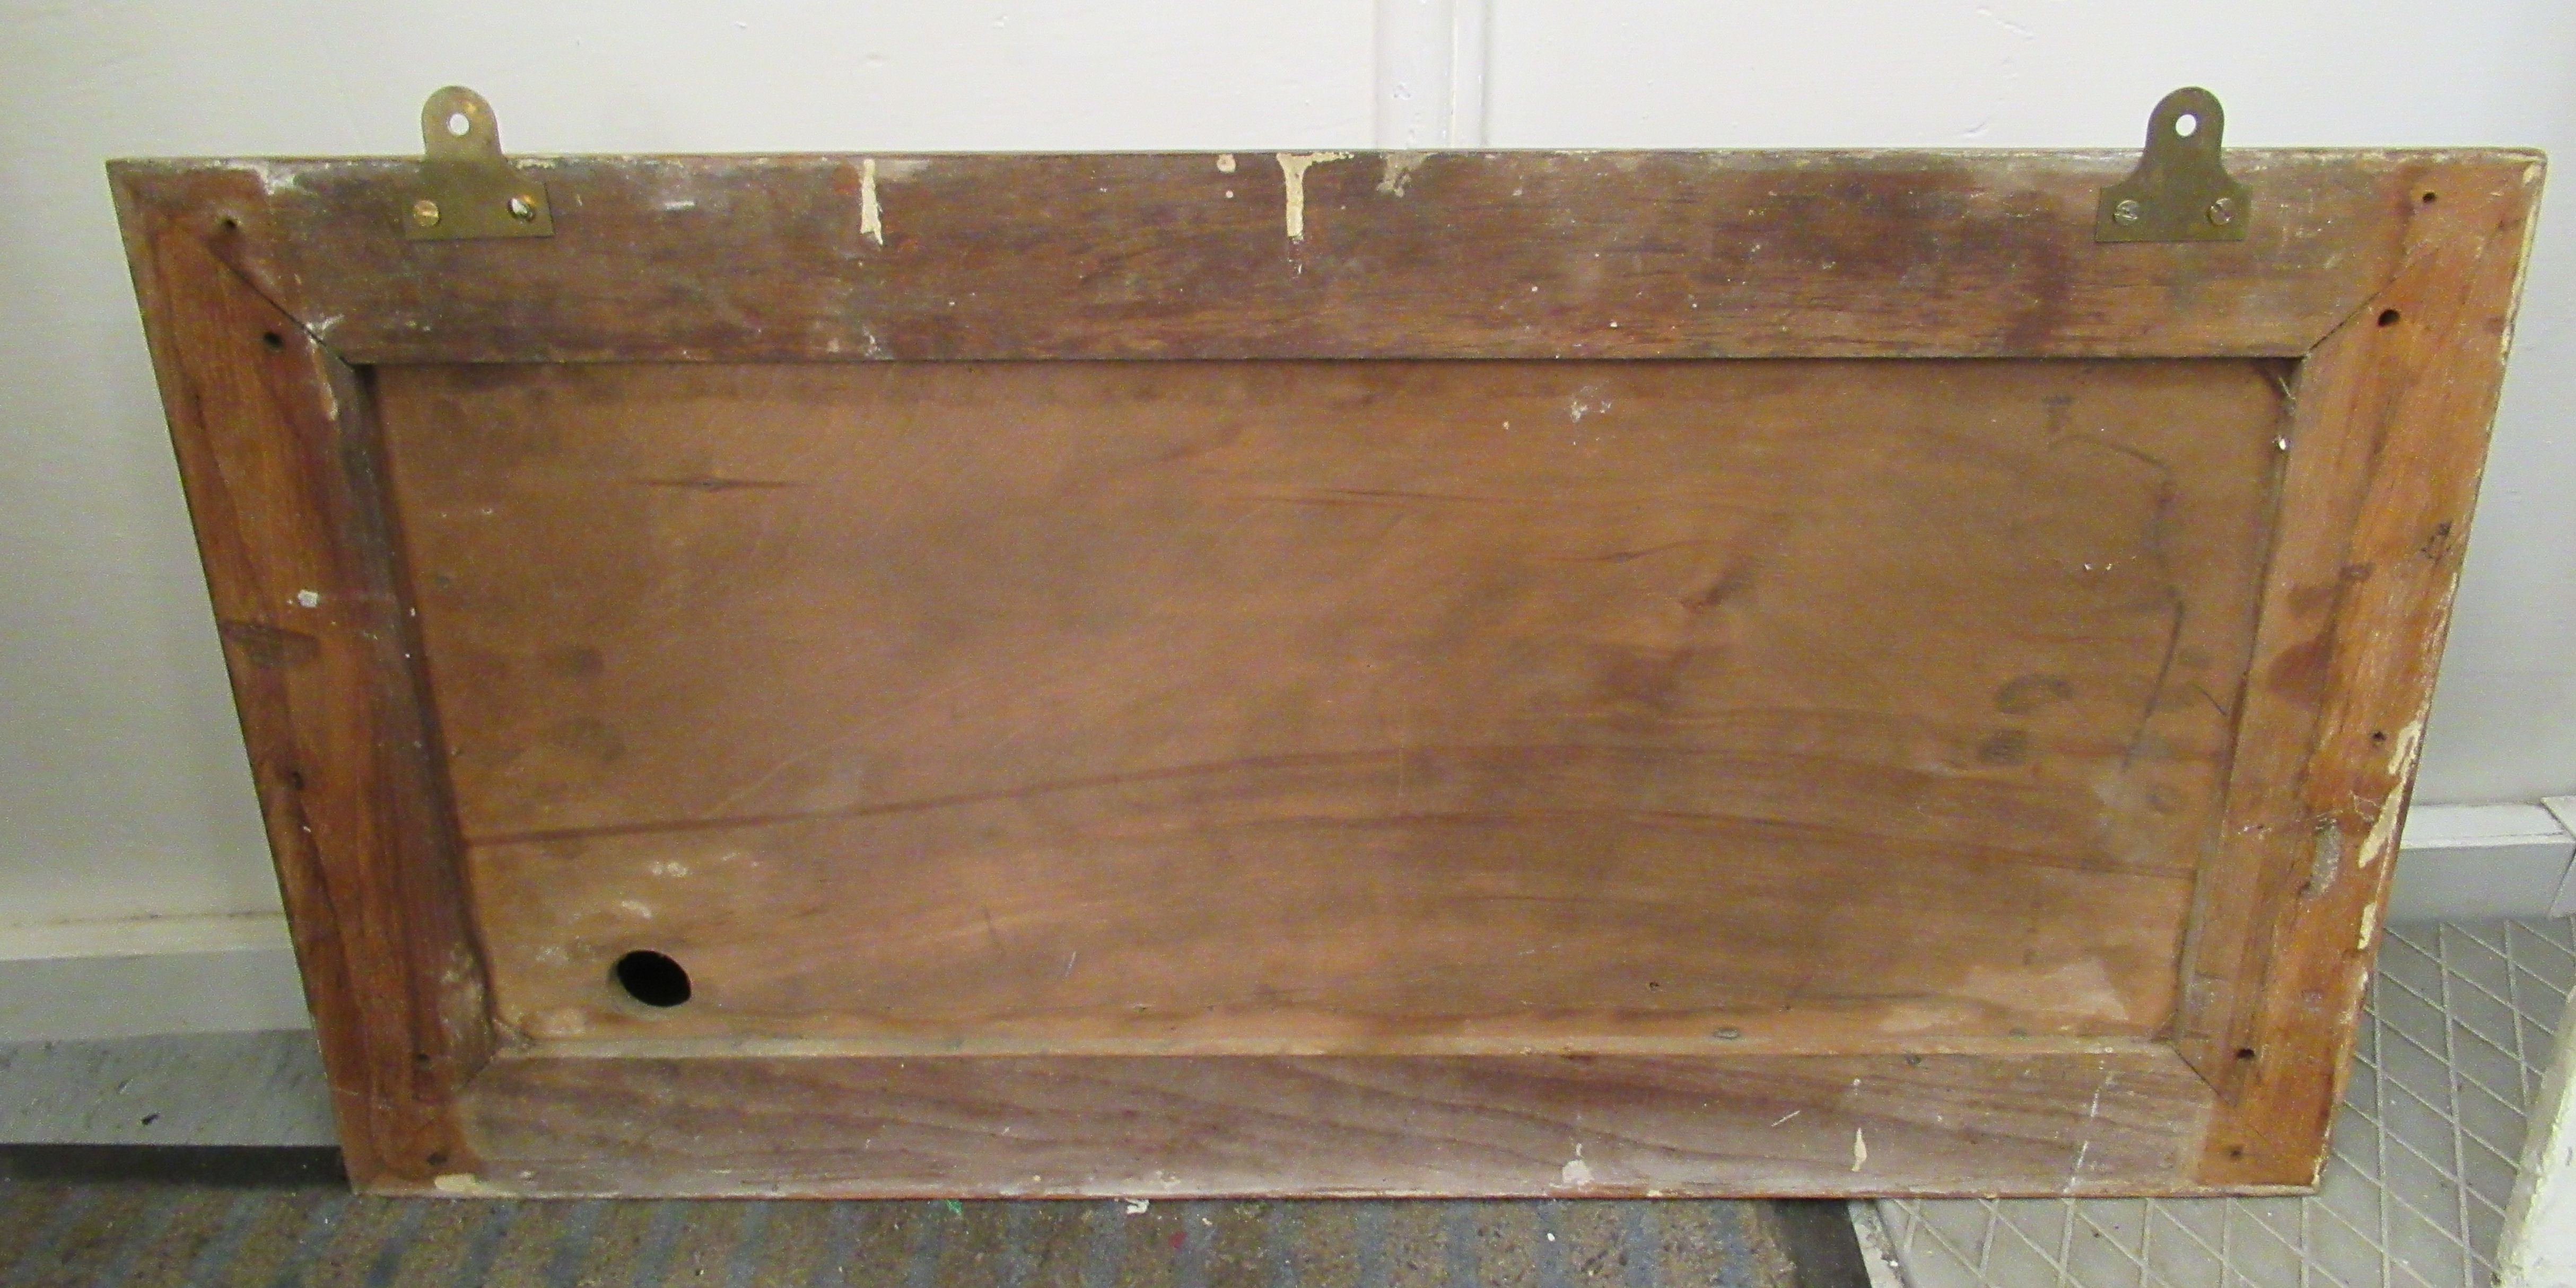 An Edwardian Hewson & Low maids mahogany signal box, - Image 3 of 3